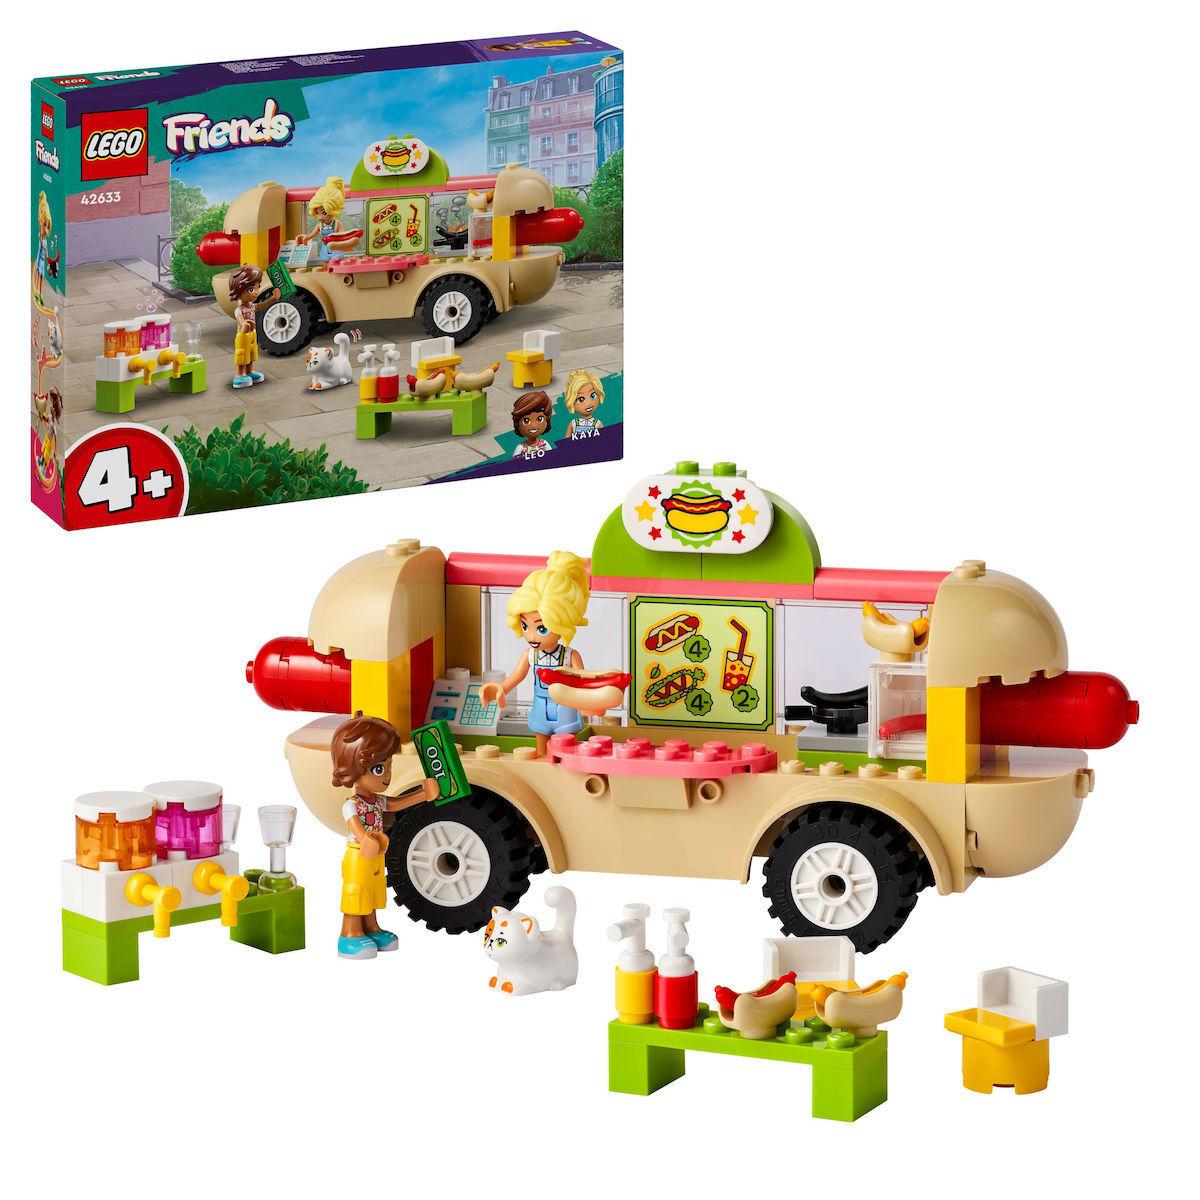 LEGO® Friends Hot Dog Food Truck 4+ (42633)